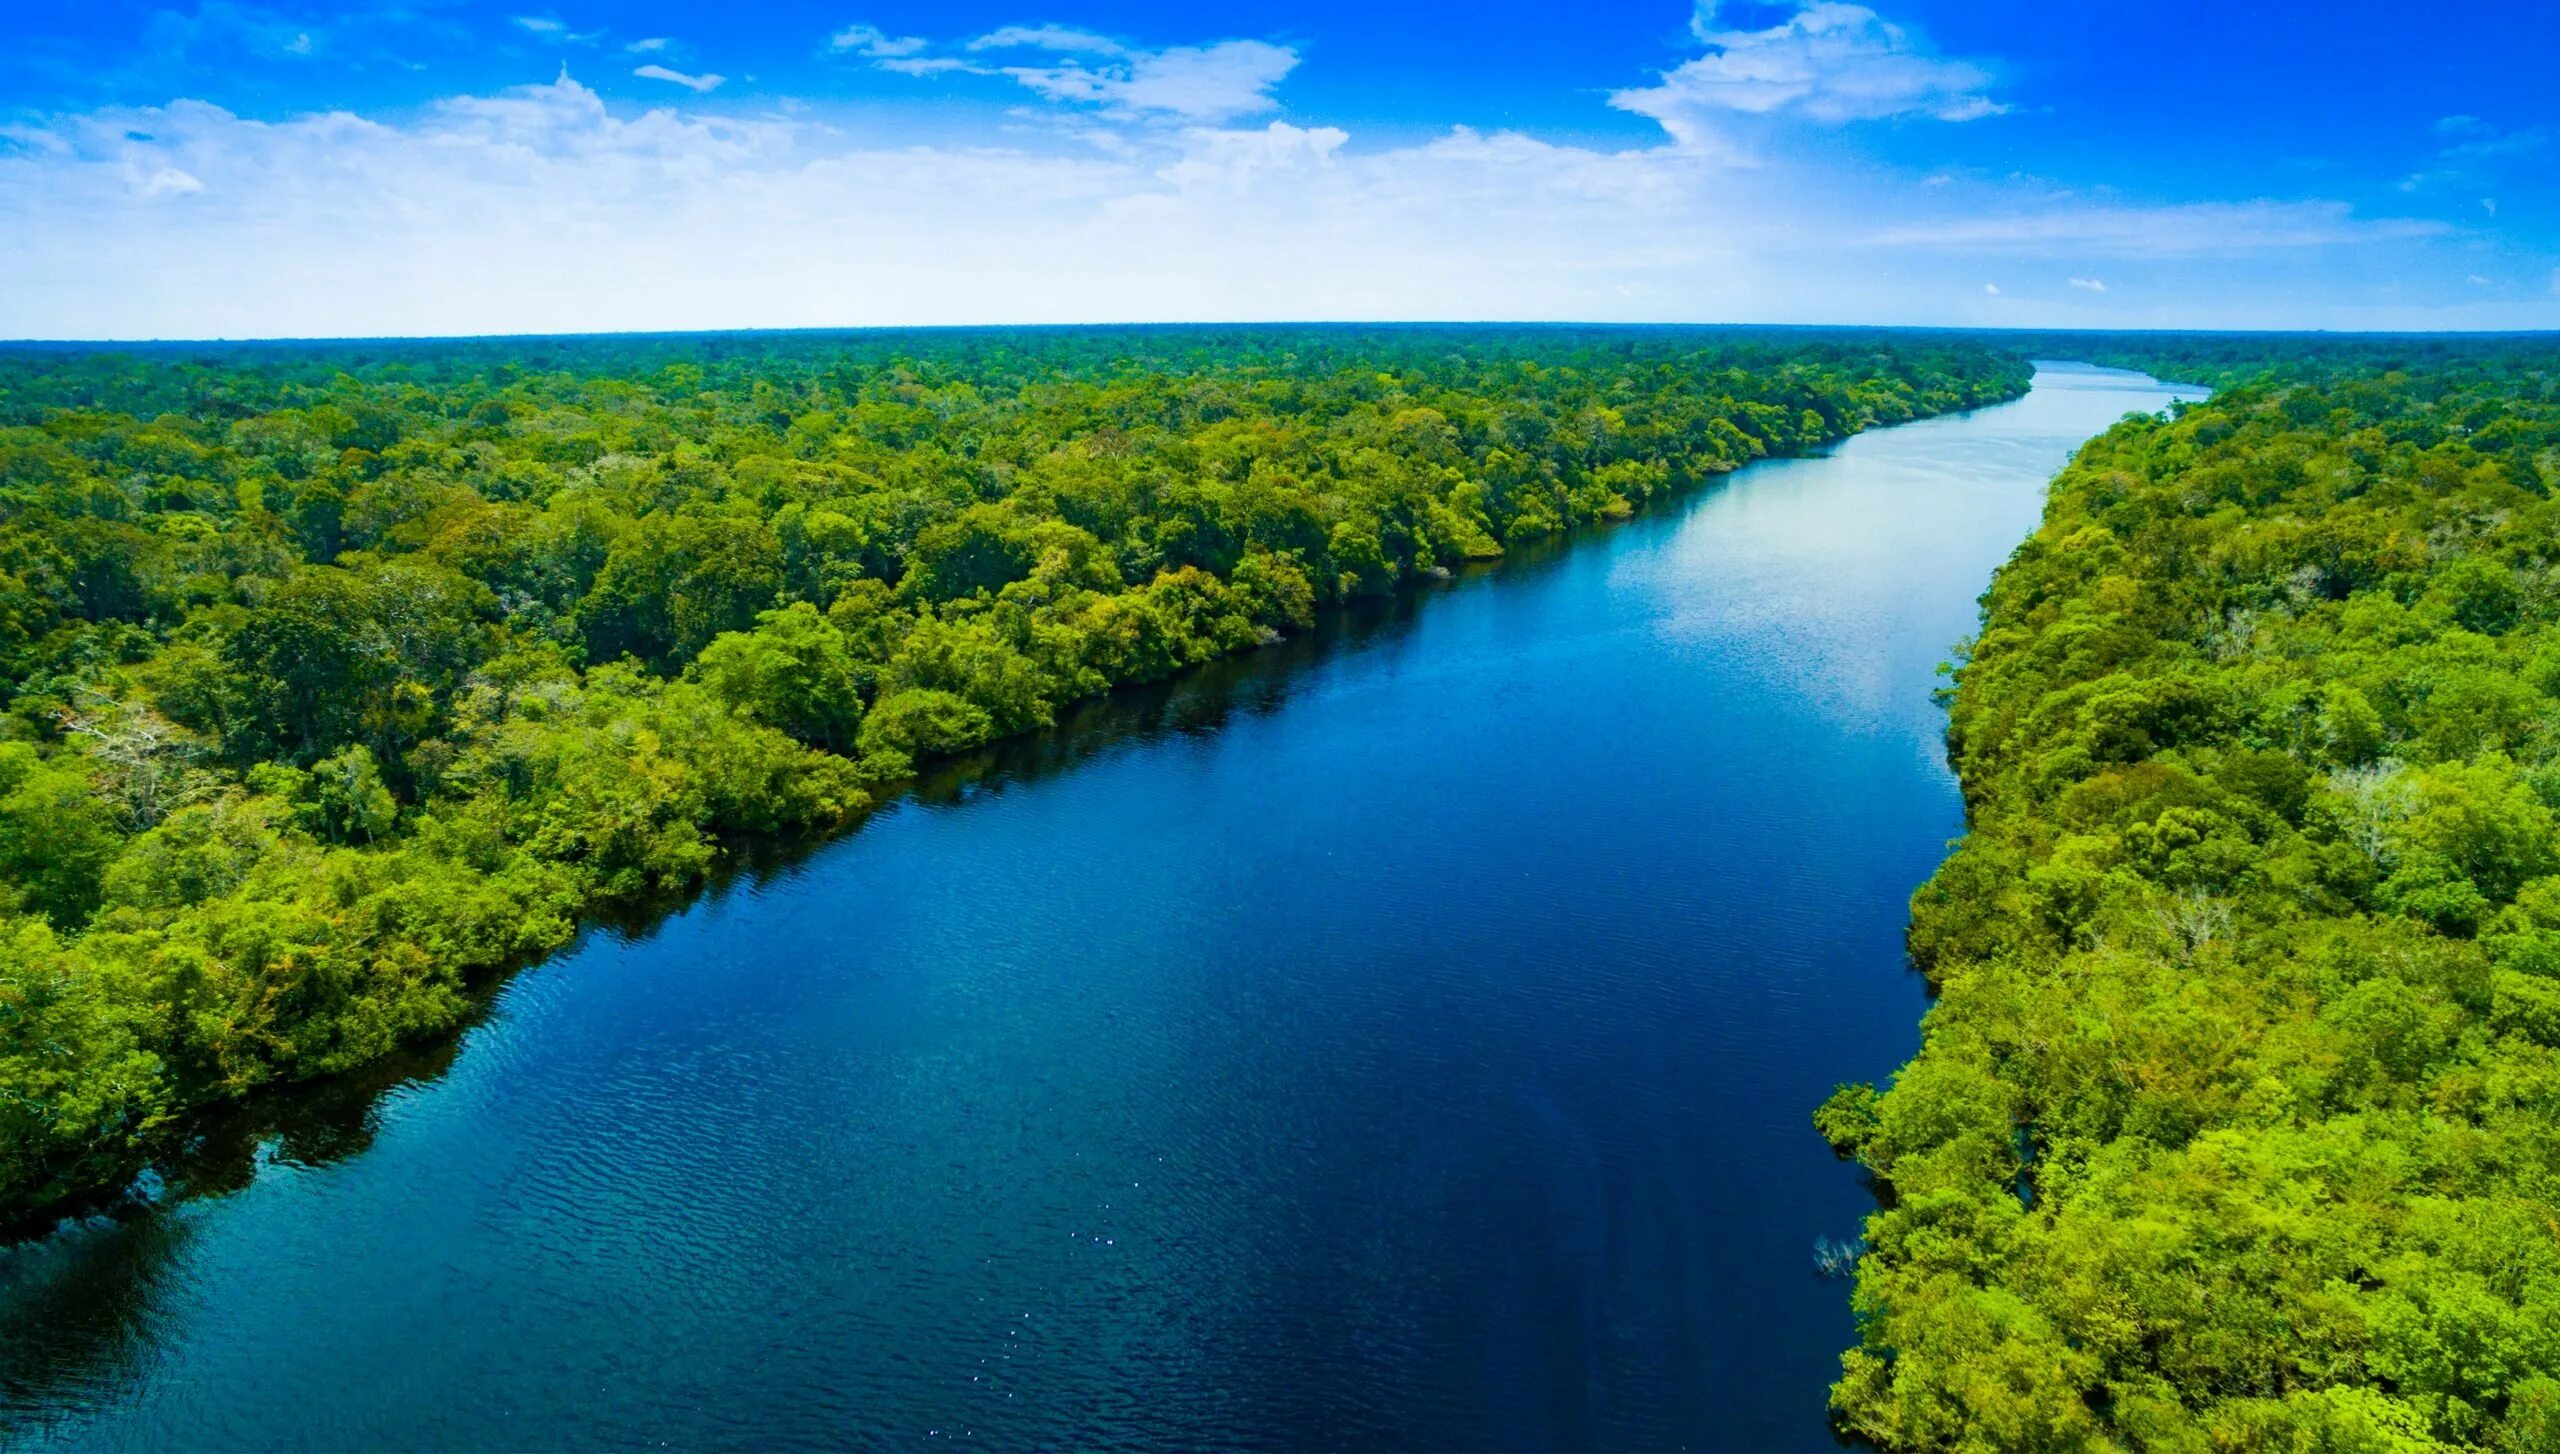 Река Амазонка в Бразилии. Природа Бразилии Амазонка. Река Амазонка фото. Амазония Южная Америка. Реки и озера бразилии 7 класс